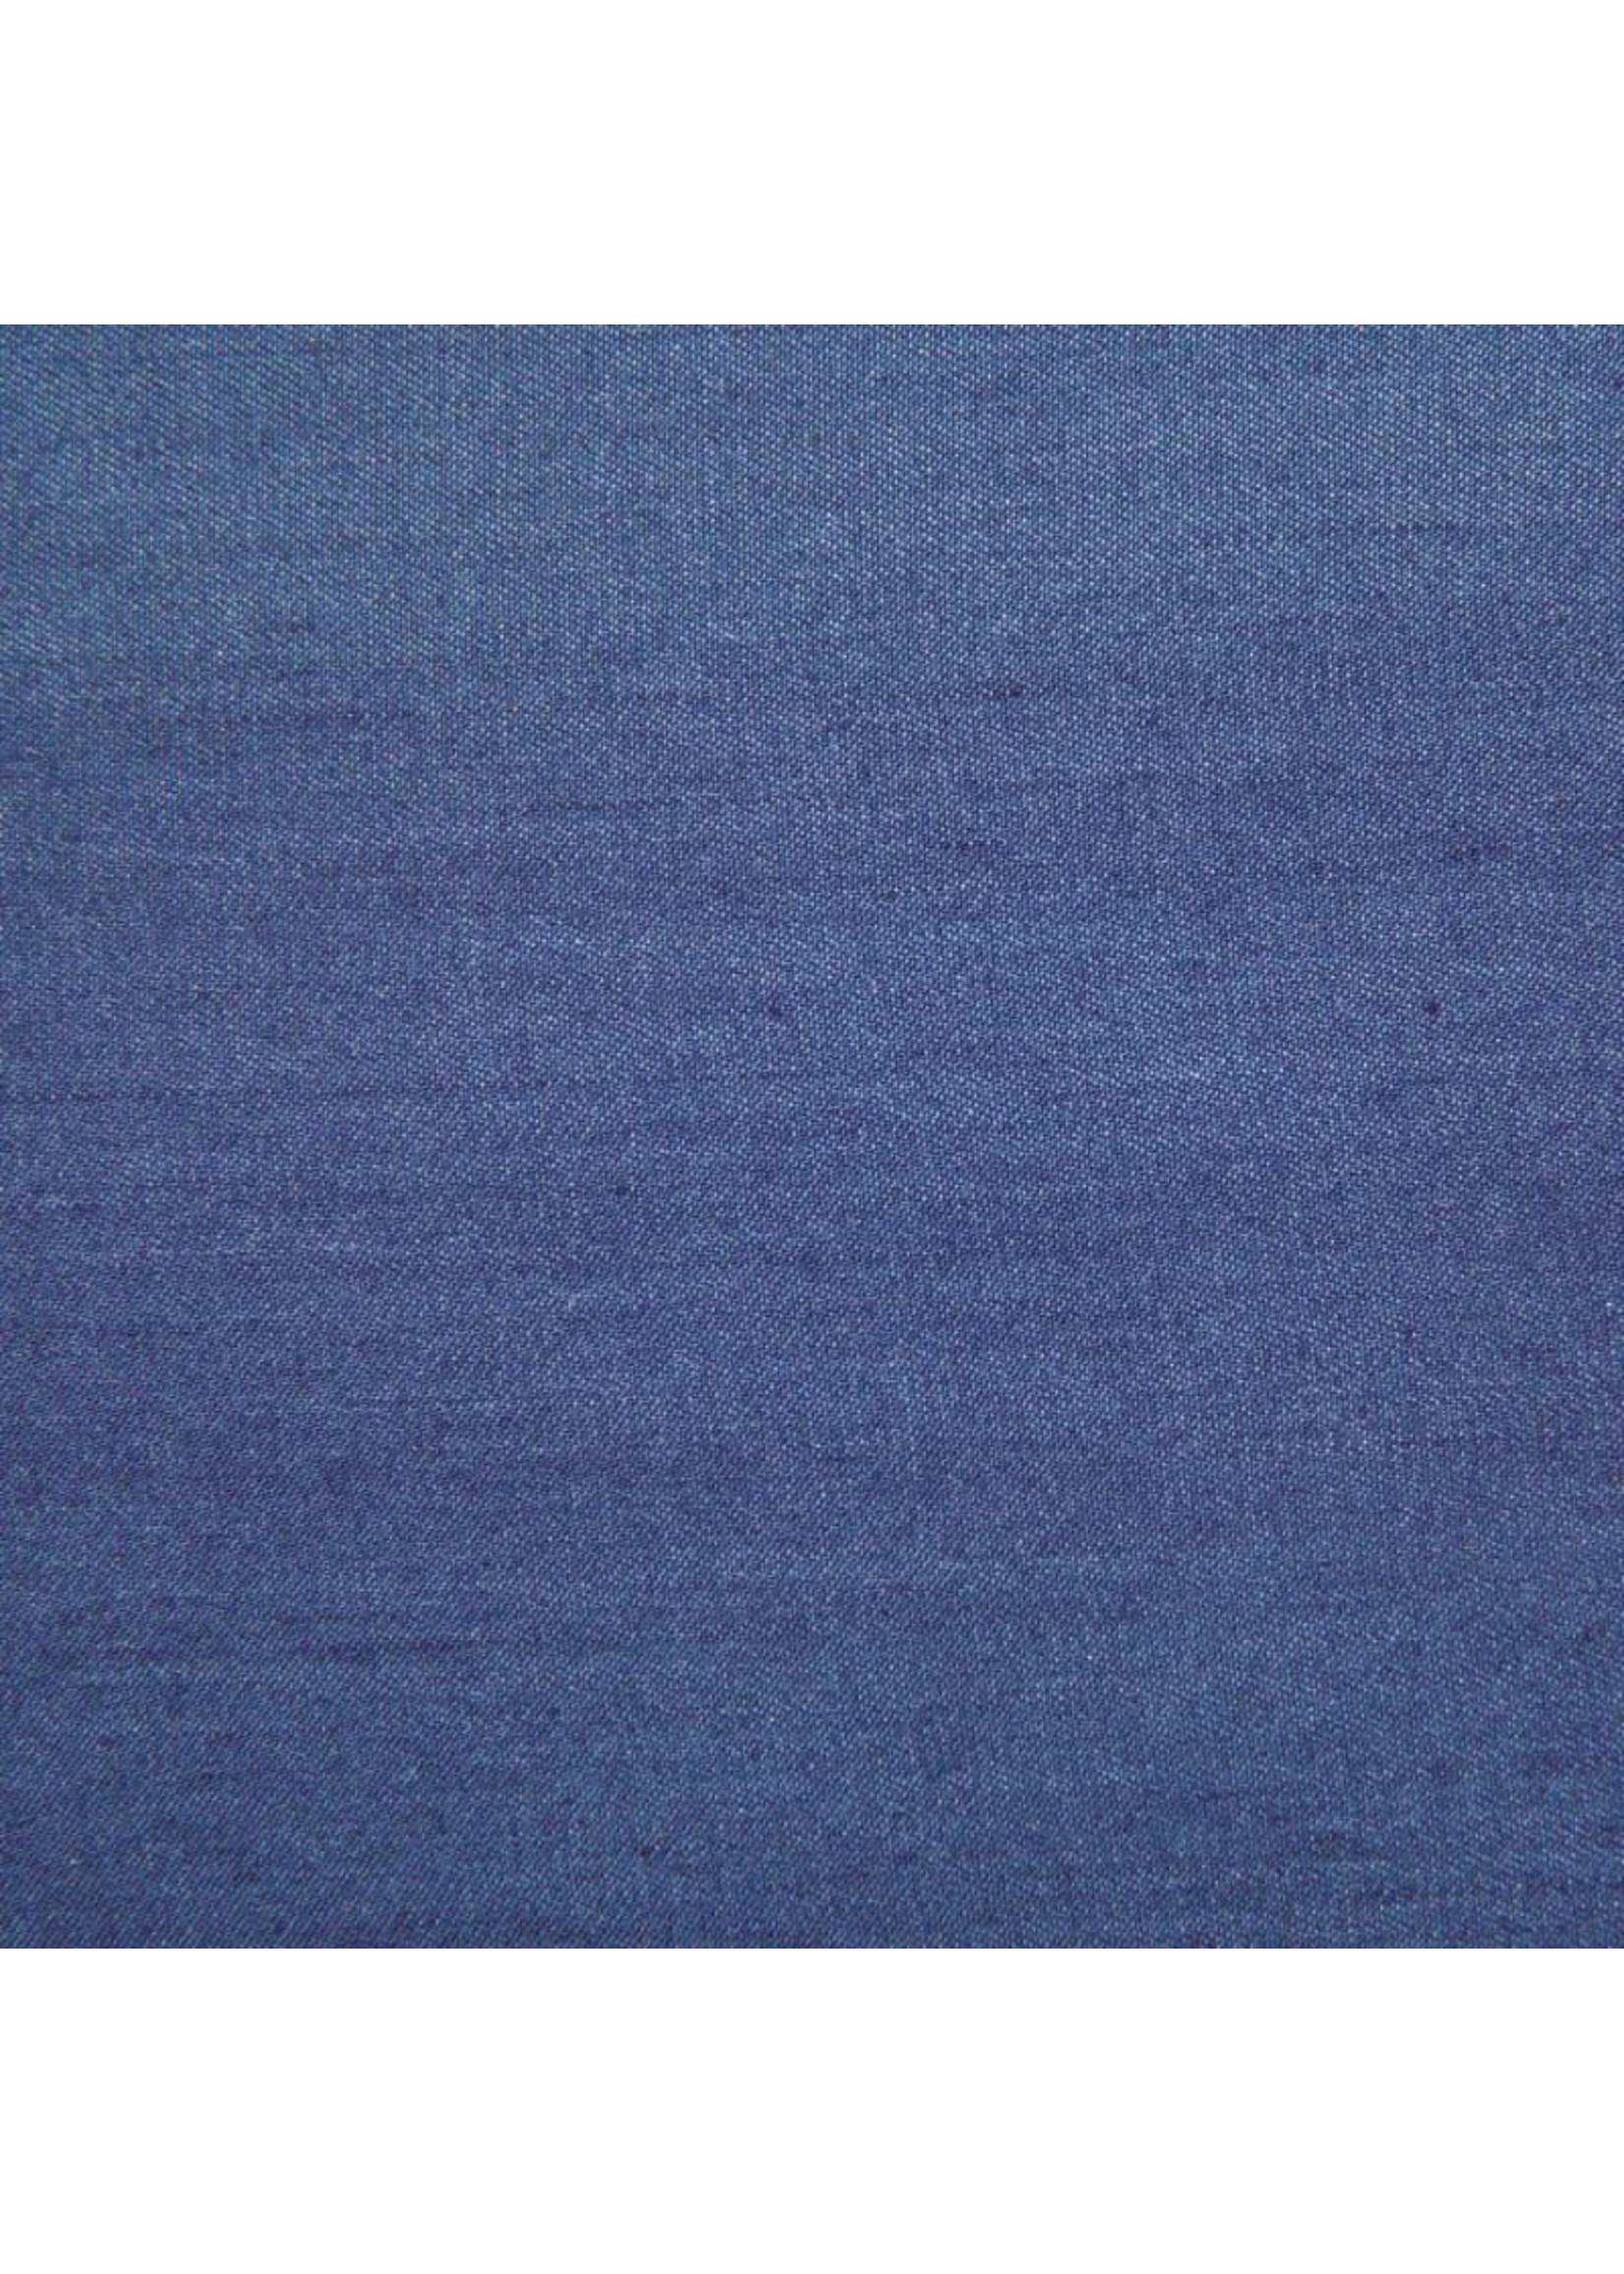 Katia Fabrics Lyocell Denim - Indigo Blue